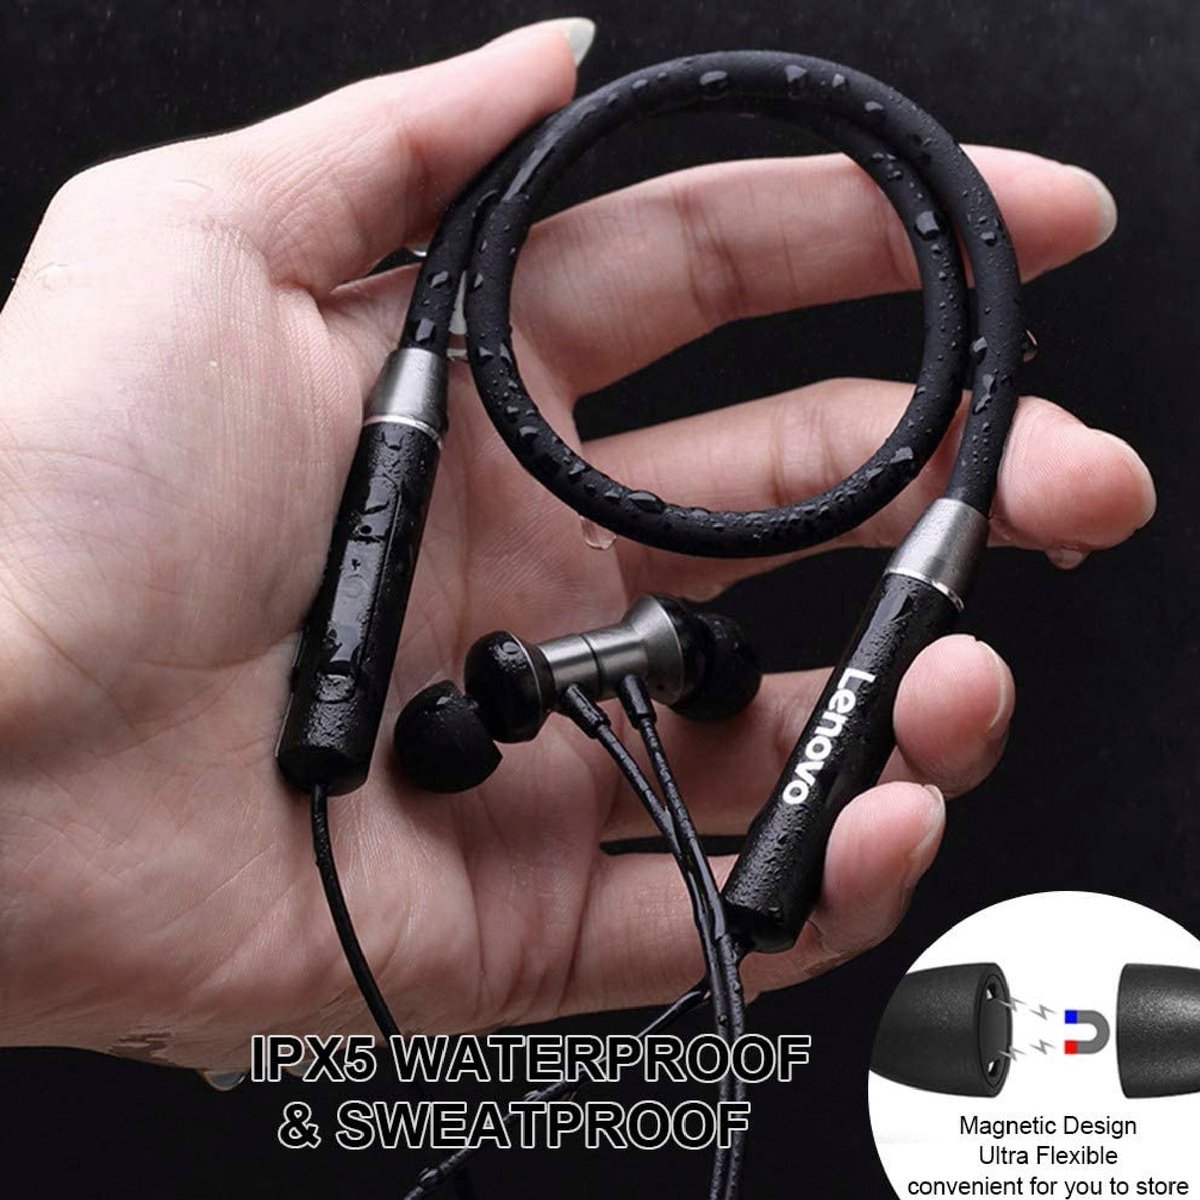 Lenovo Bluetooth Wireless Neckband Earphone Sports Earbuds HE05, Black